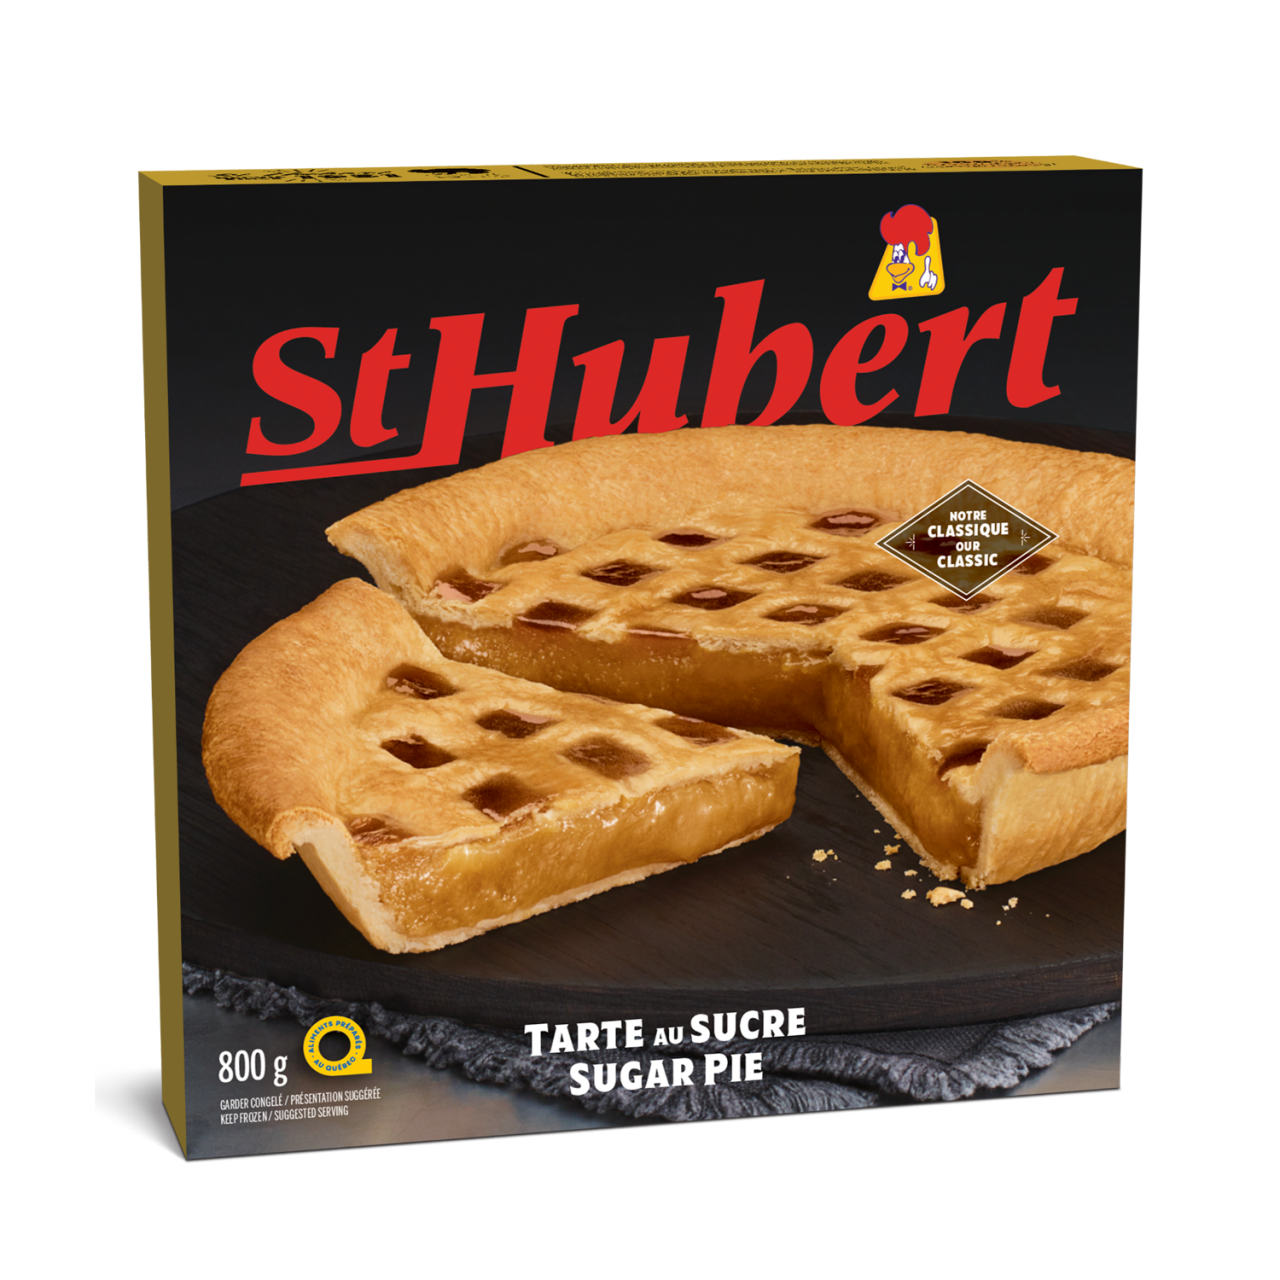 St-Hubert Sugar pie